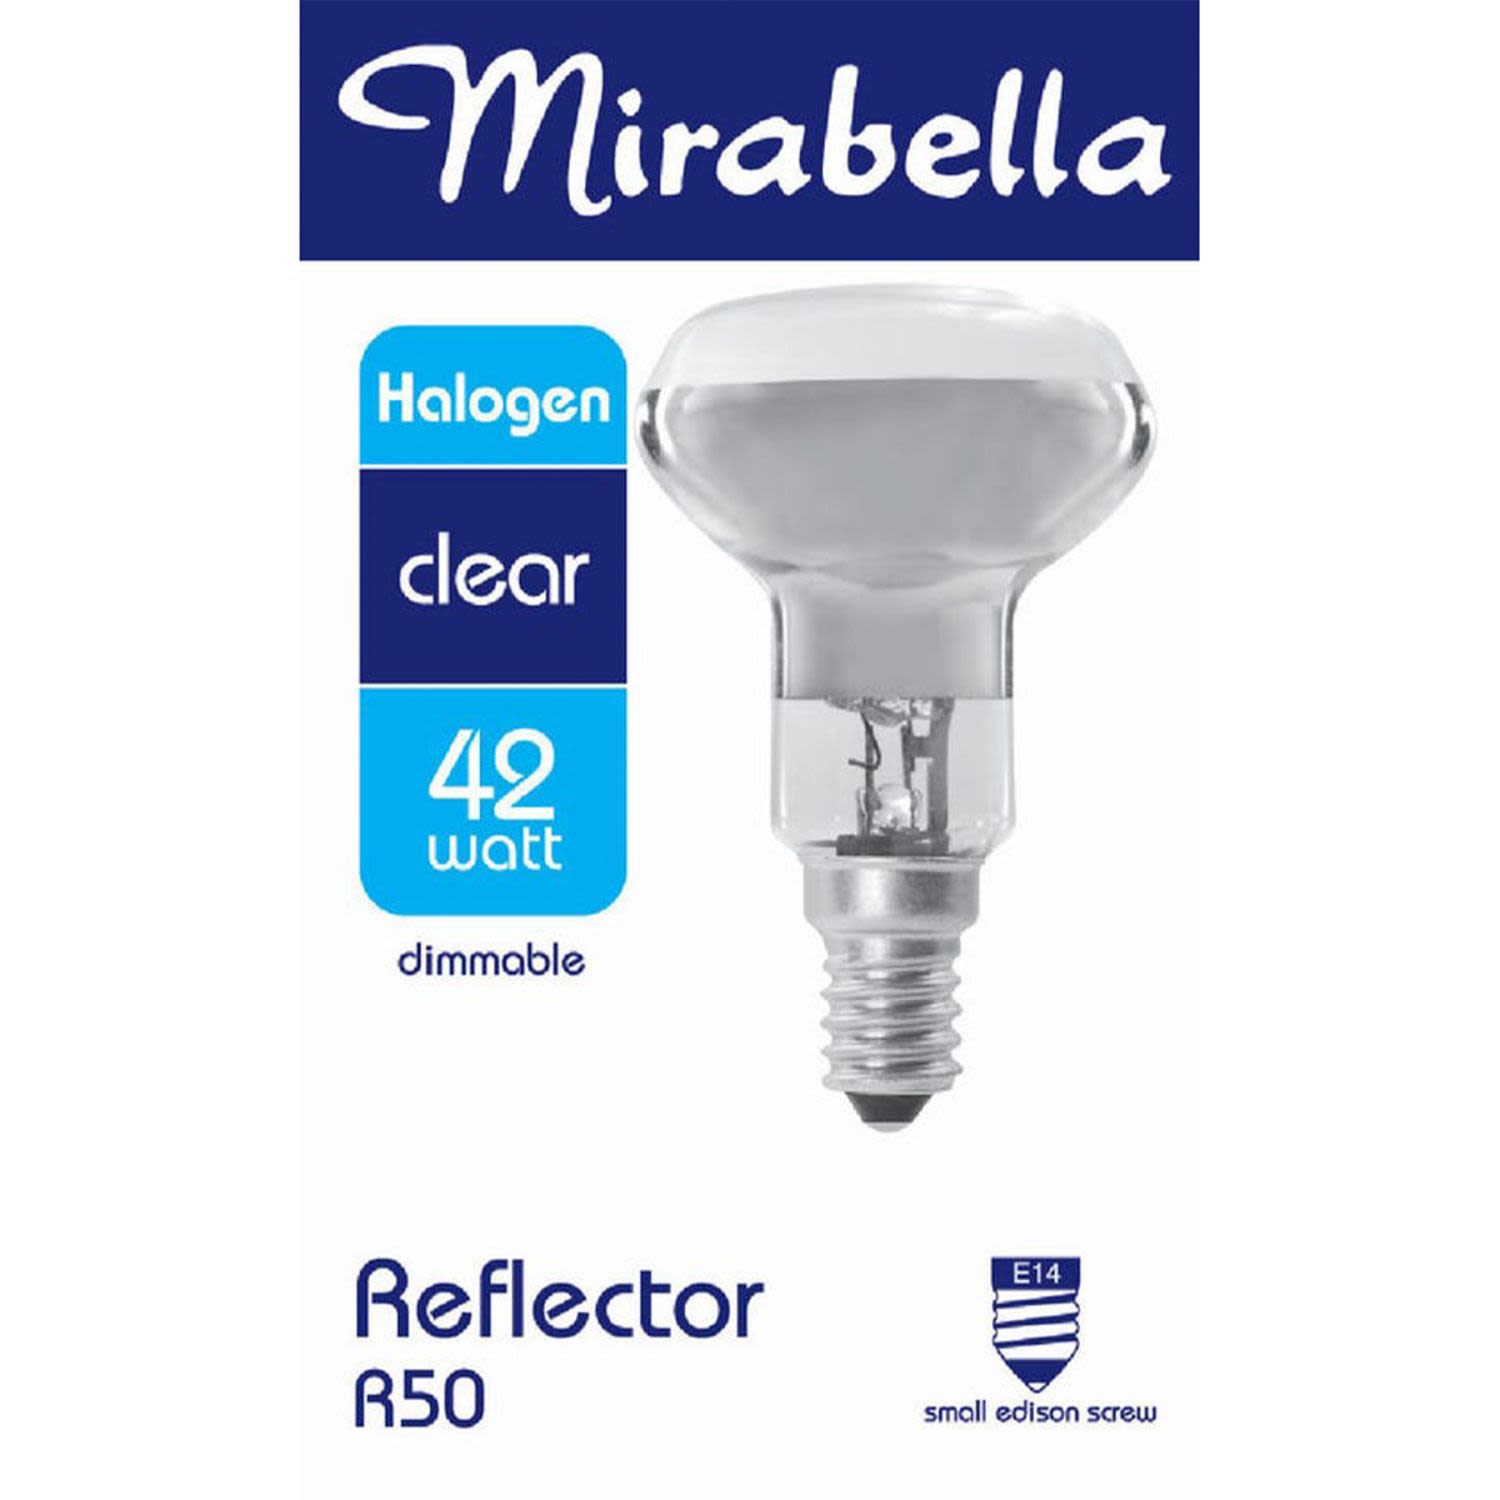 Mirabella Halogen Reflector Globe R50 42W SES Clear, 1 Each